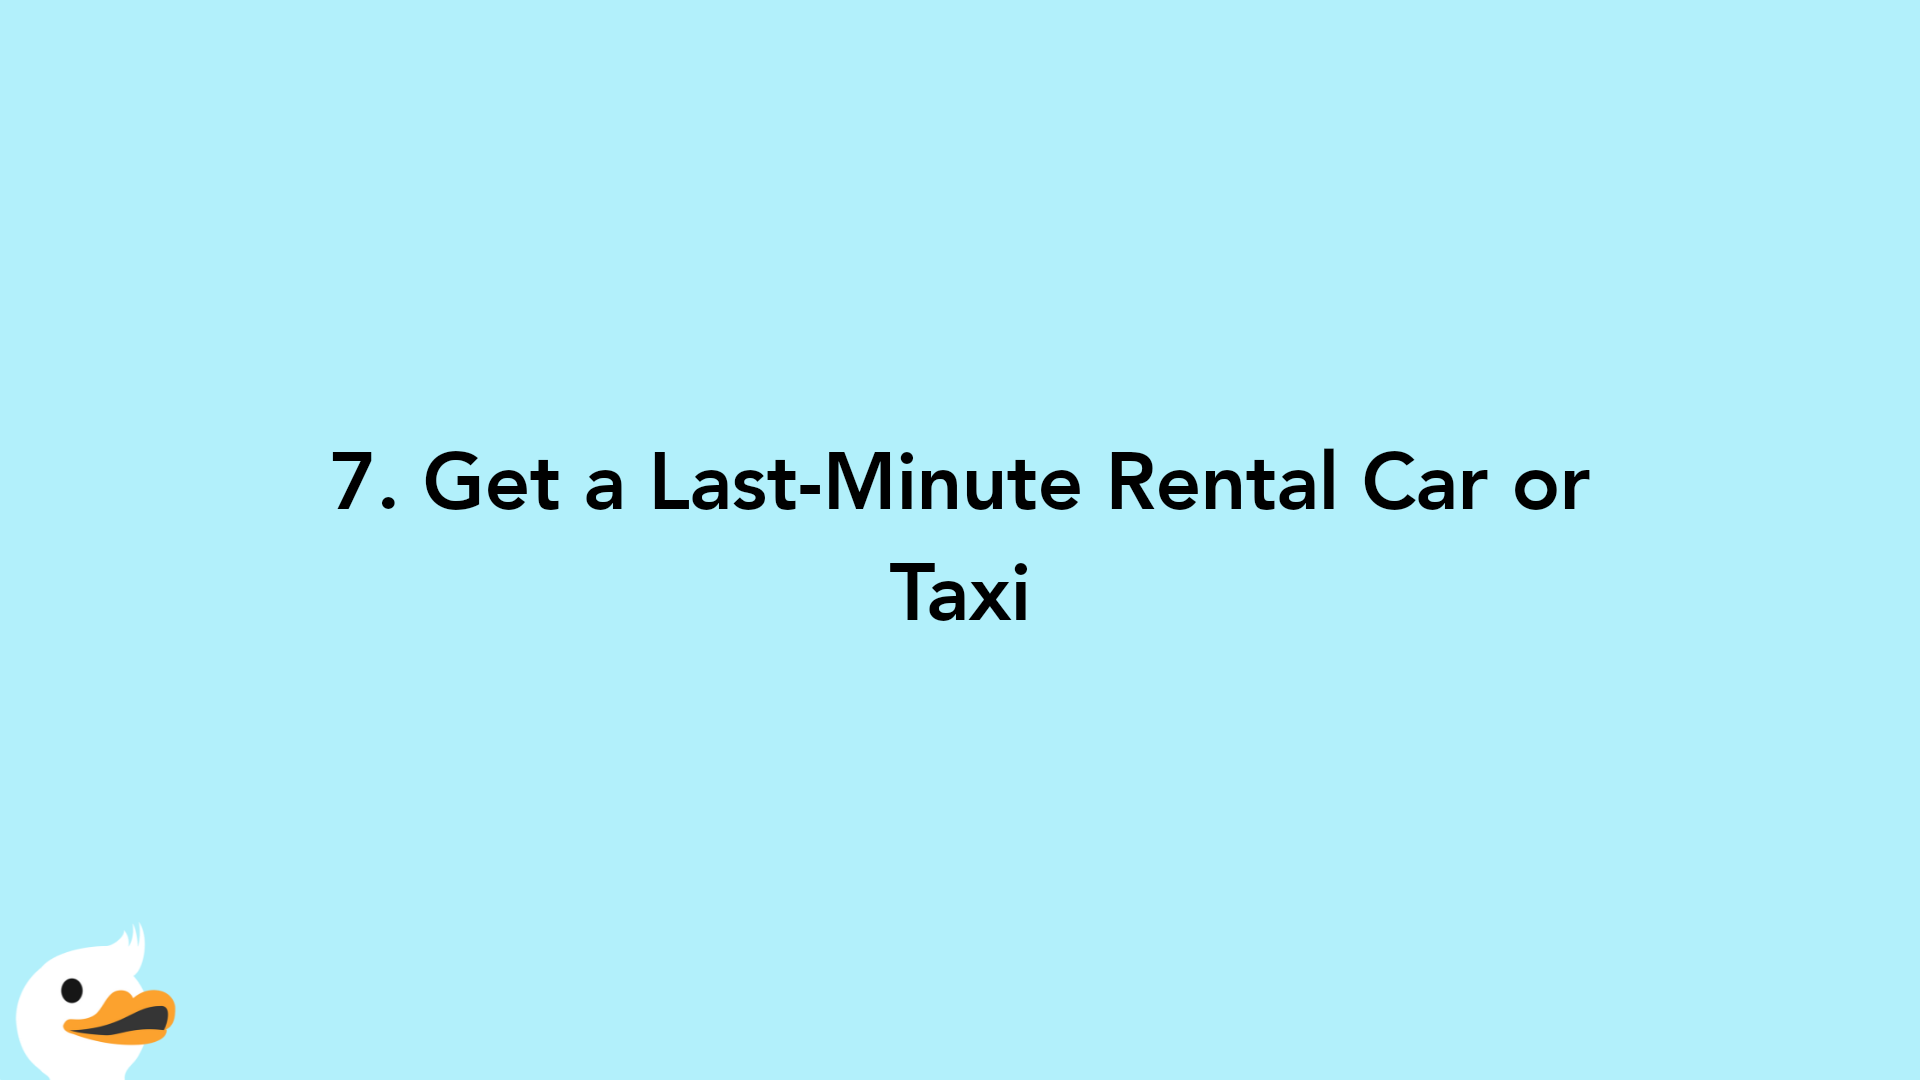 7. Get a Last-Minute Rental Car or Taxi